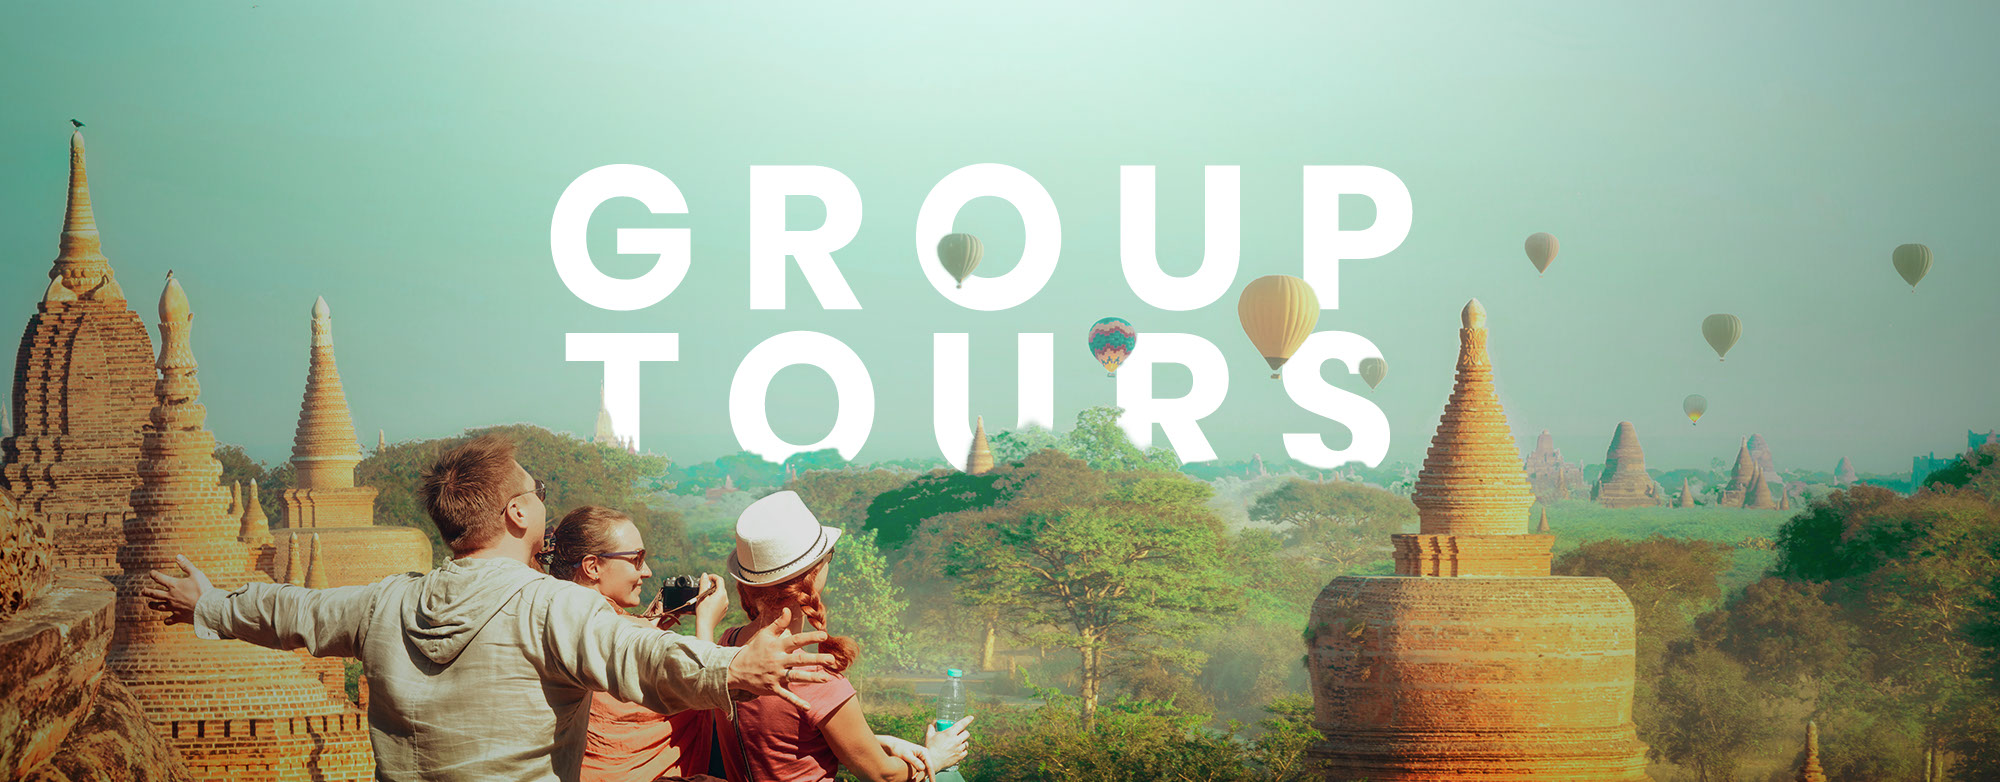 grouptour-index-banner